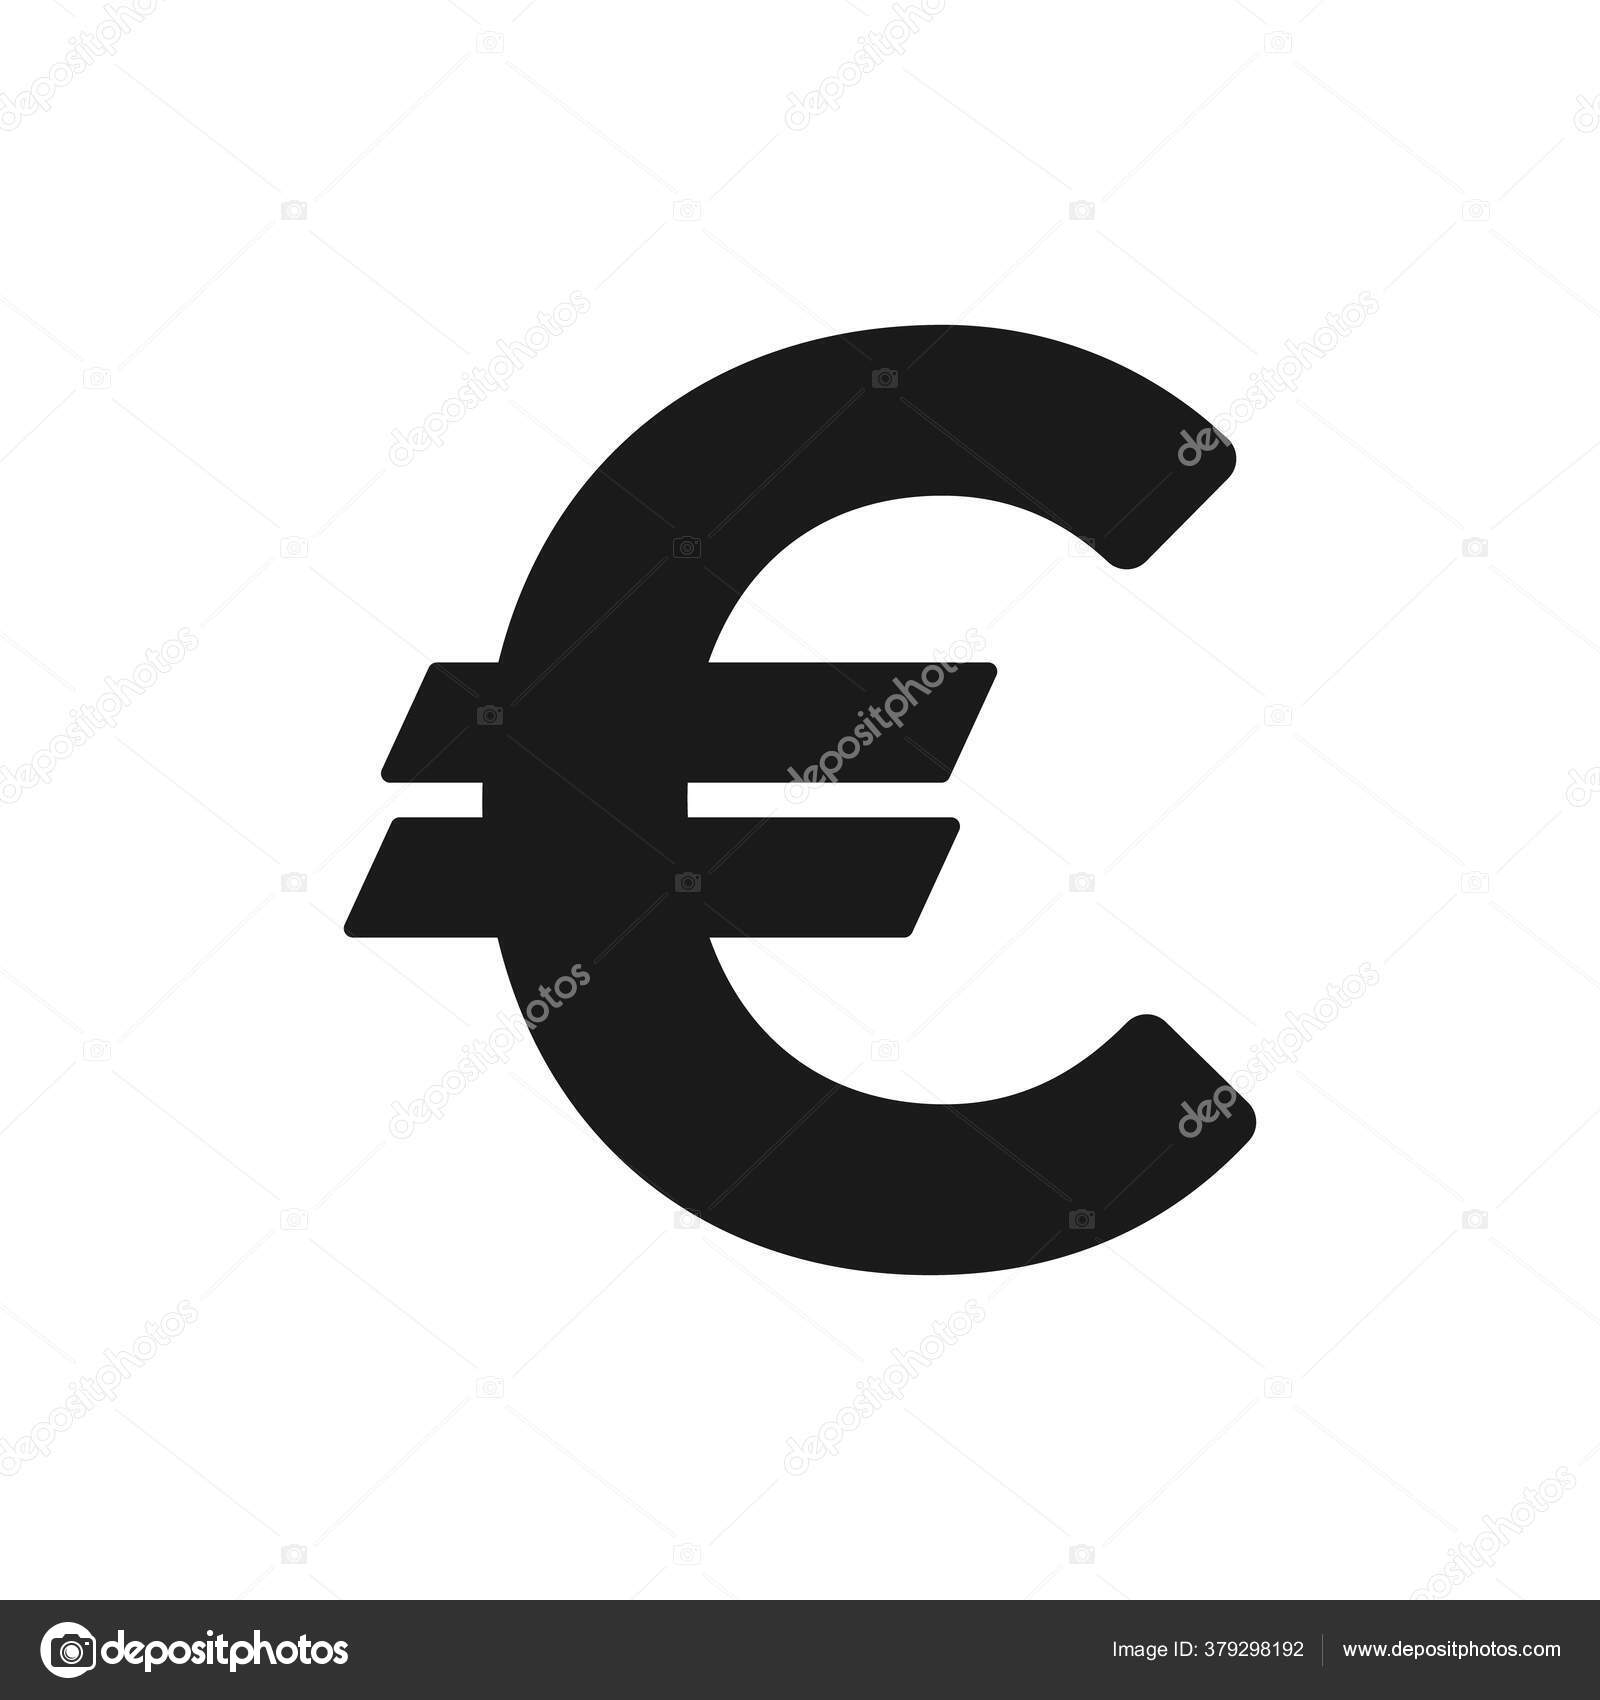 https://st4.depositphotos.com/30935530/37929/v/1600/depositphotos_379298192-stock-illustration-euro-vector-icon-money-symbolizes.jpg